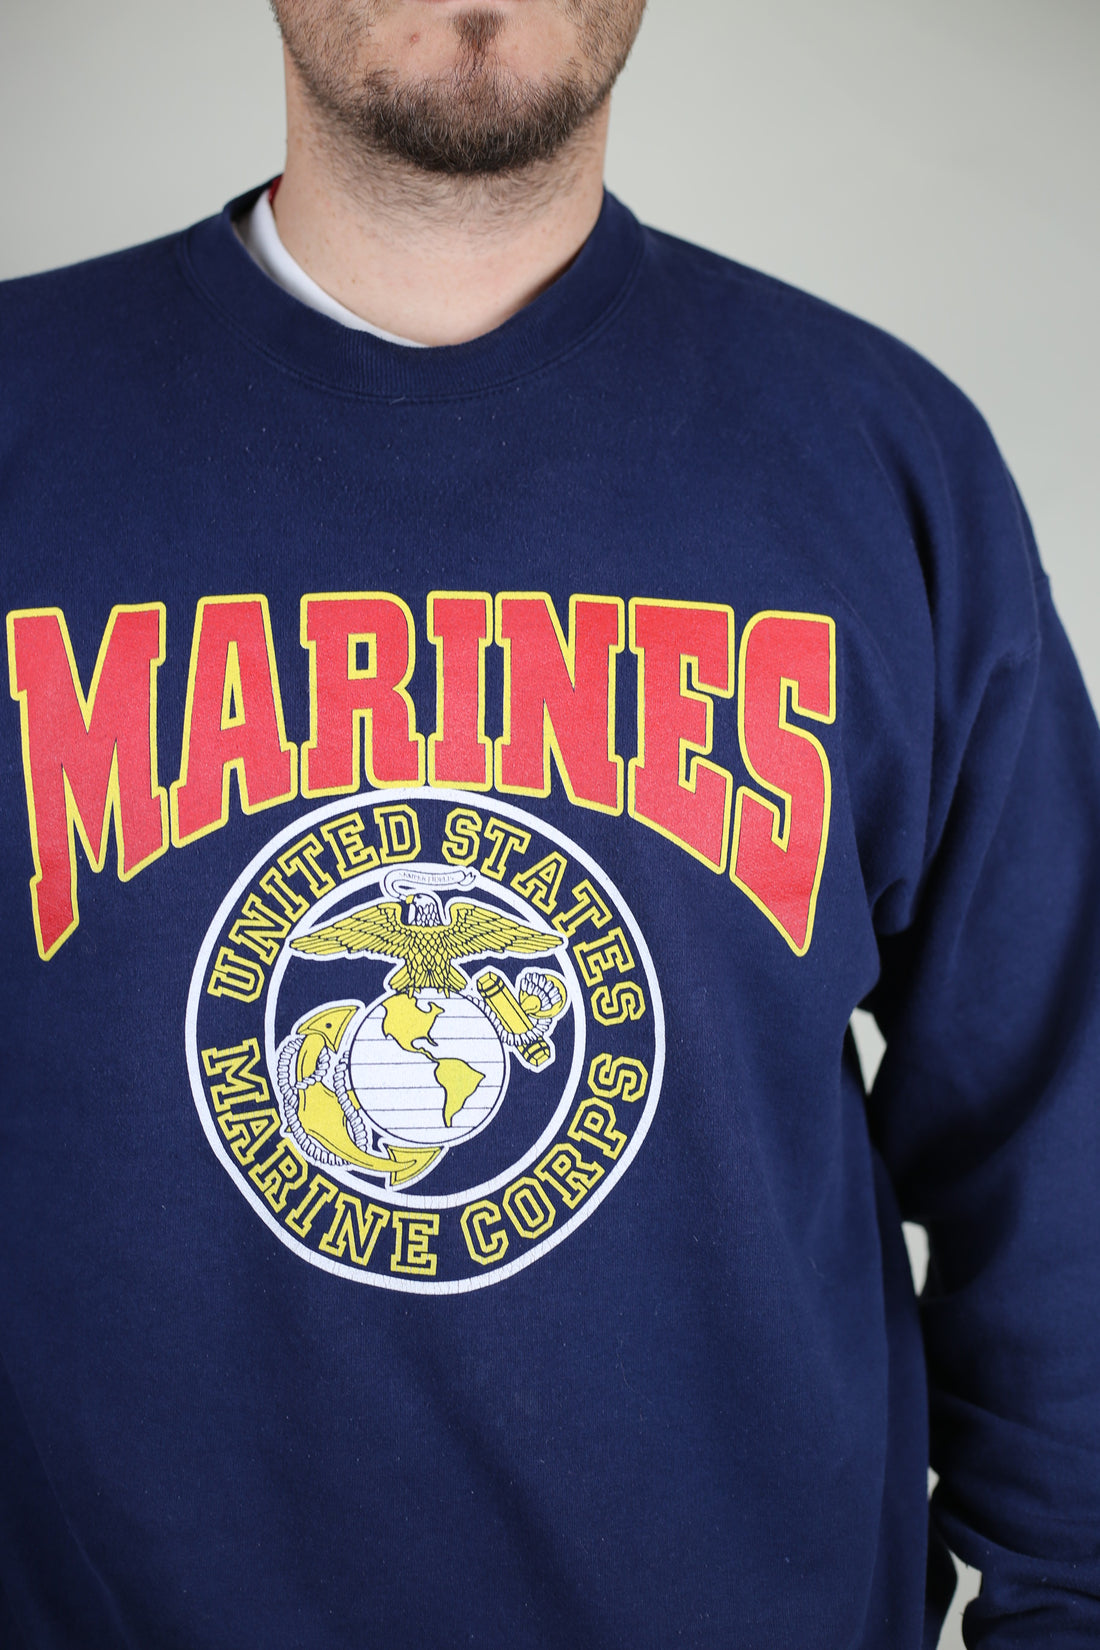 US Marines sweatshirt